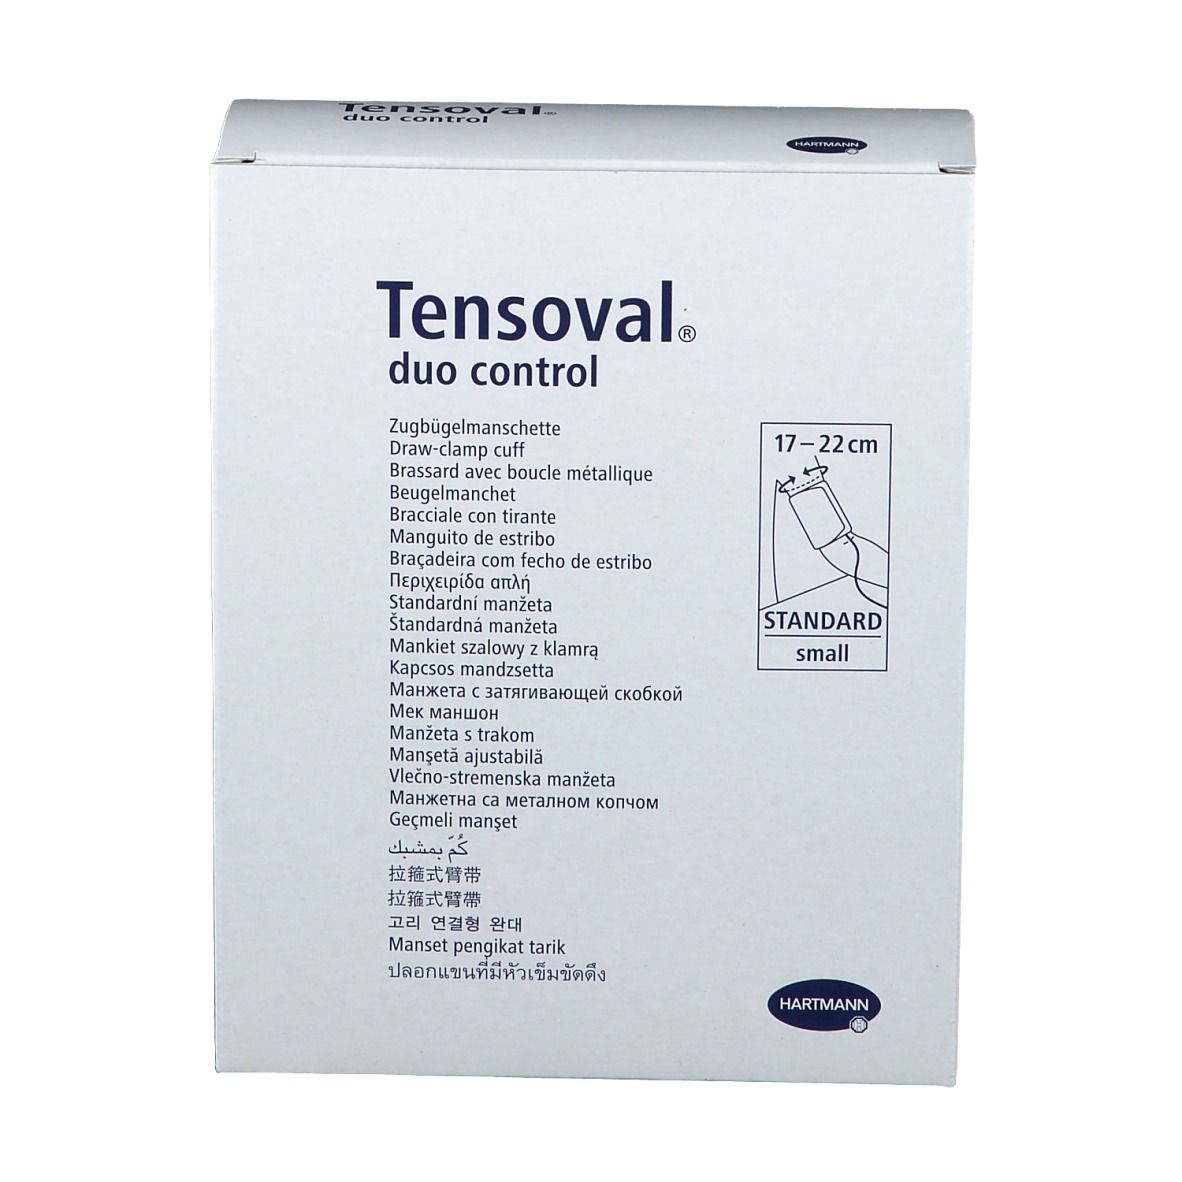 Tensoval® duo control Manschette small 17 - 22 cm